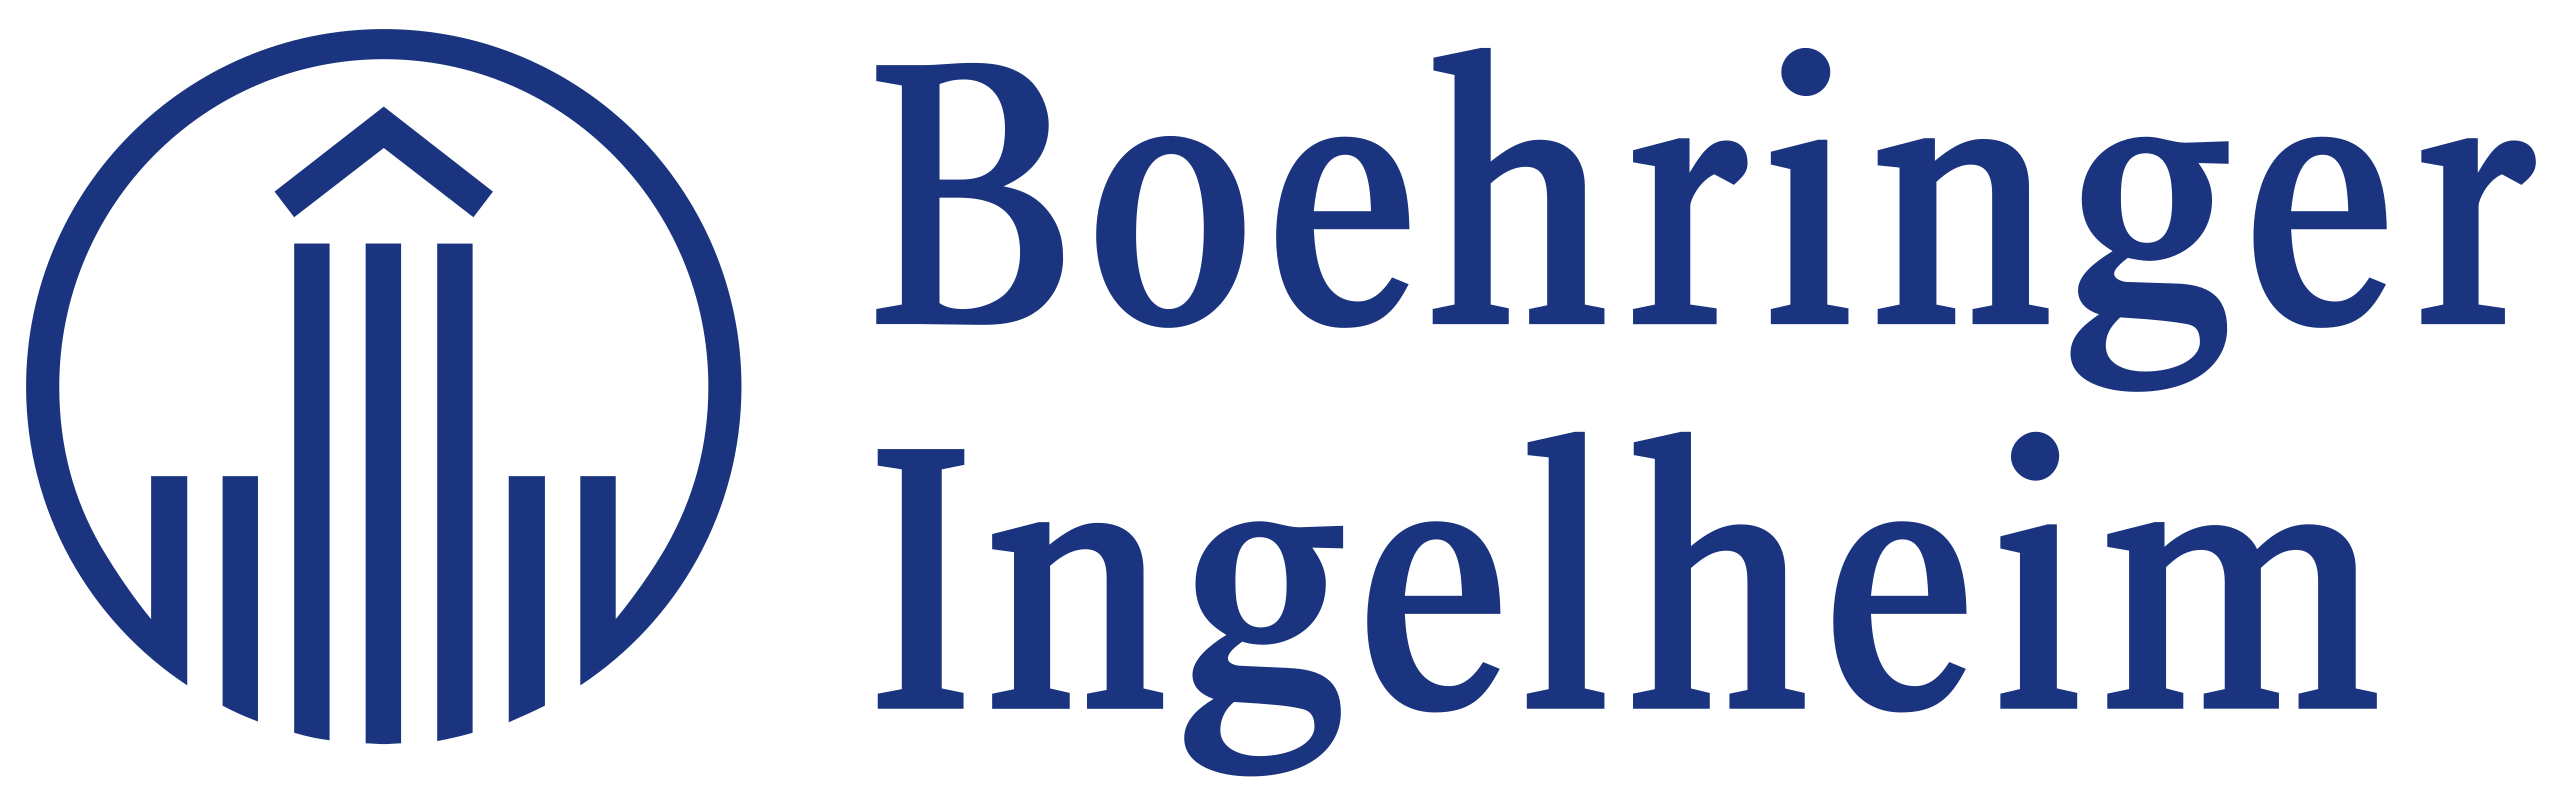 Boehringer_Ingelheim_Logo.png